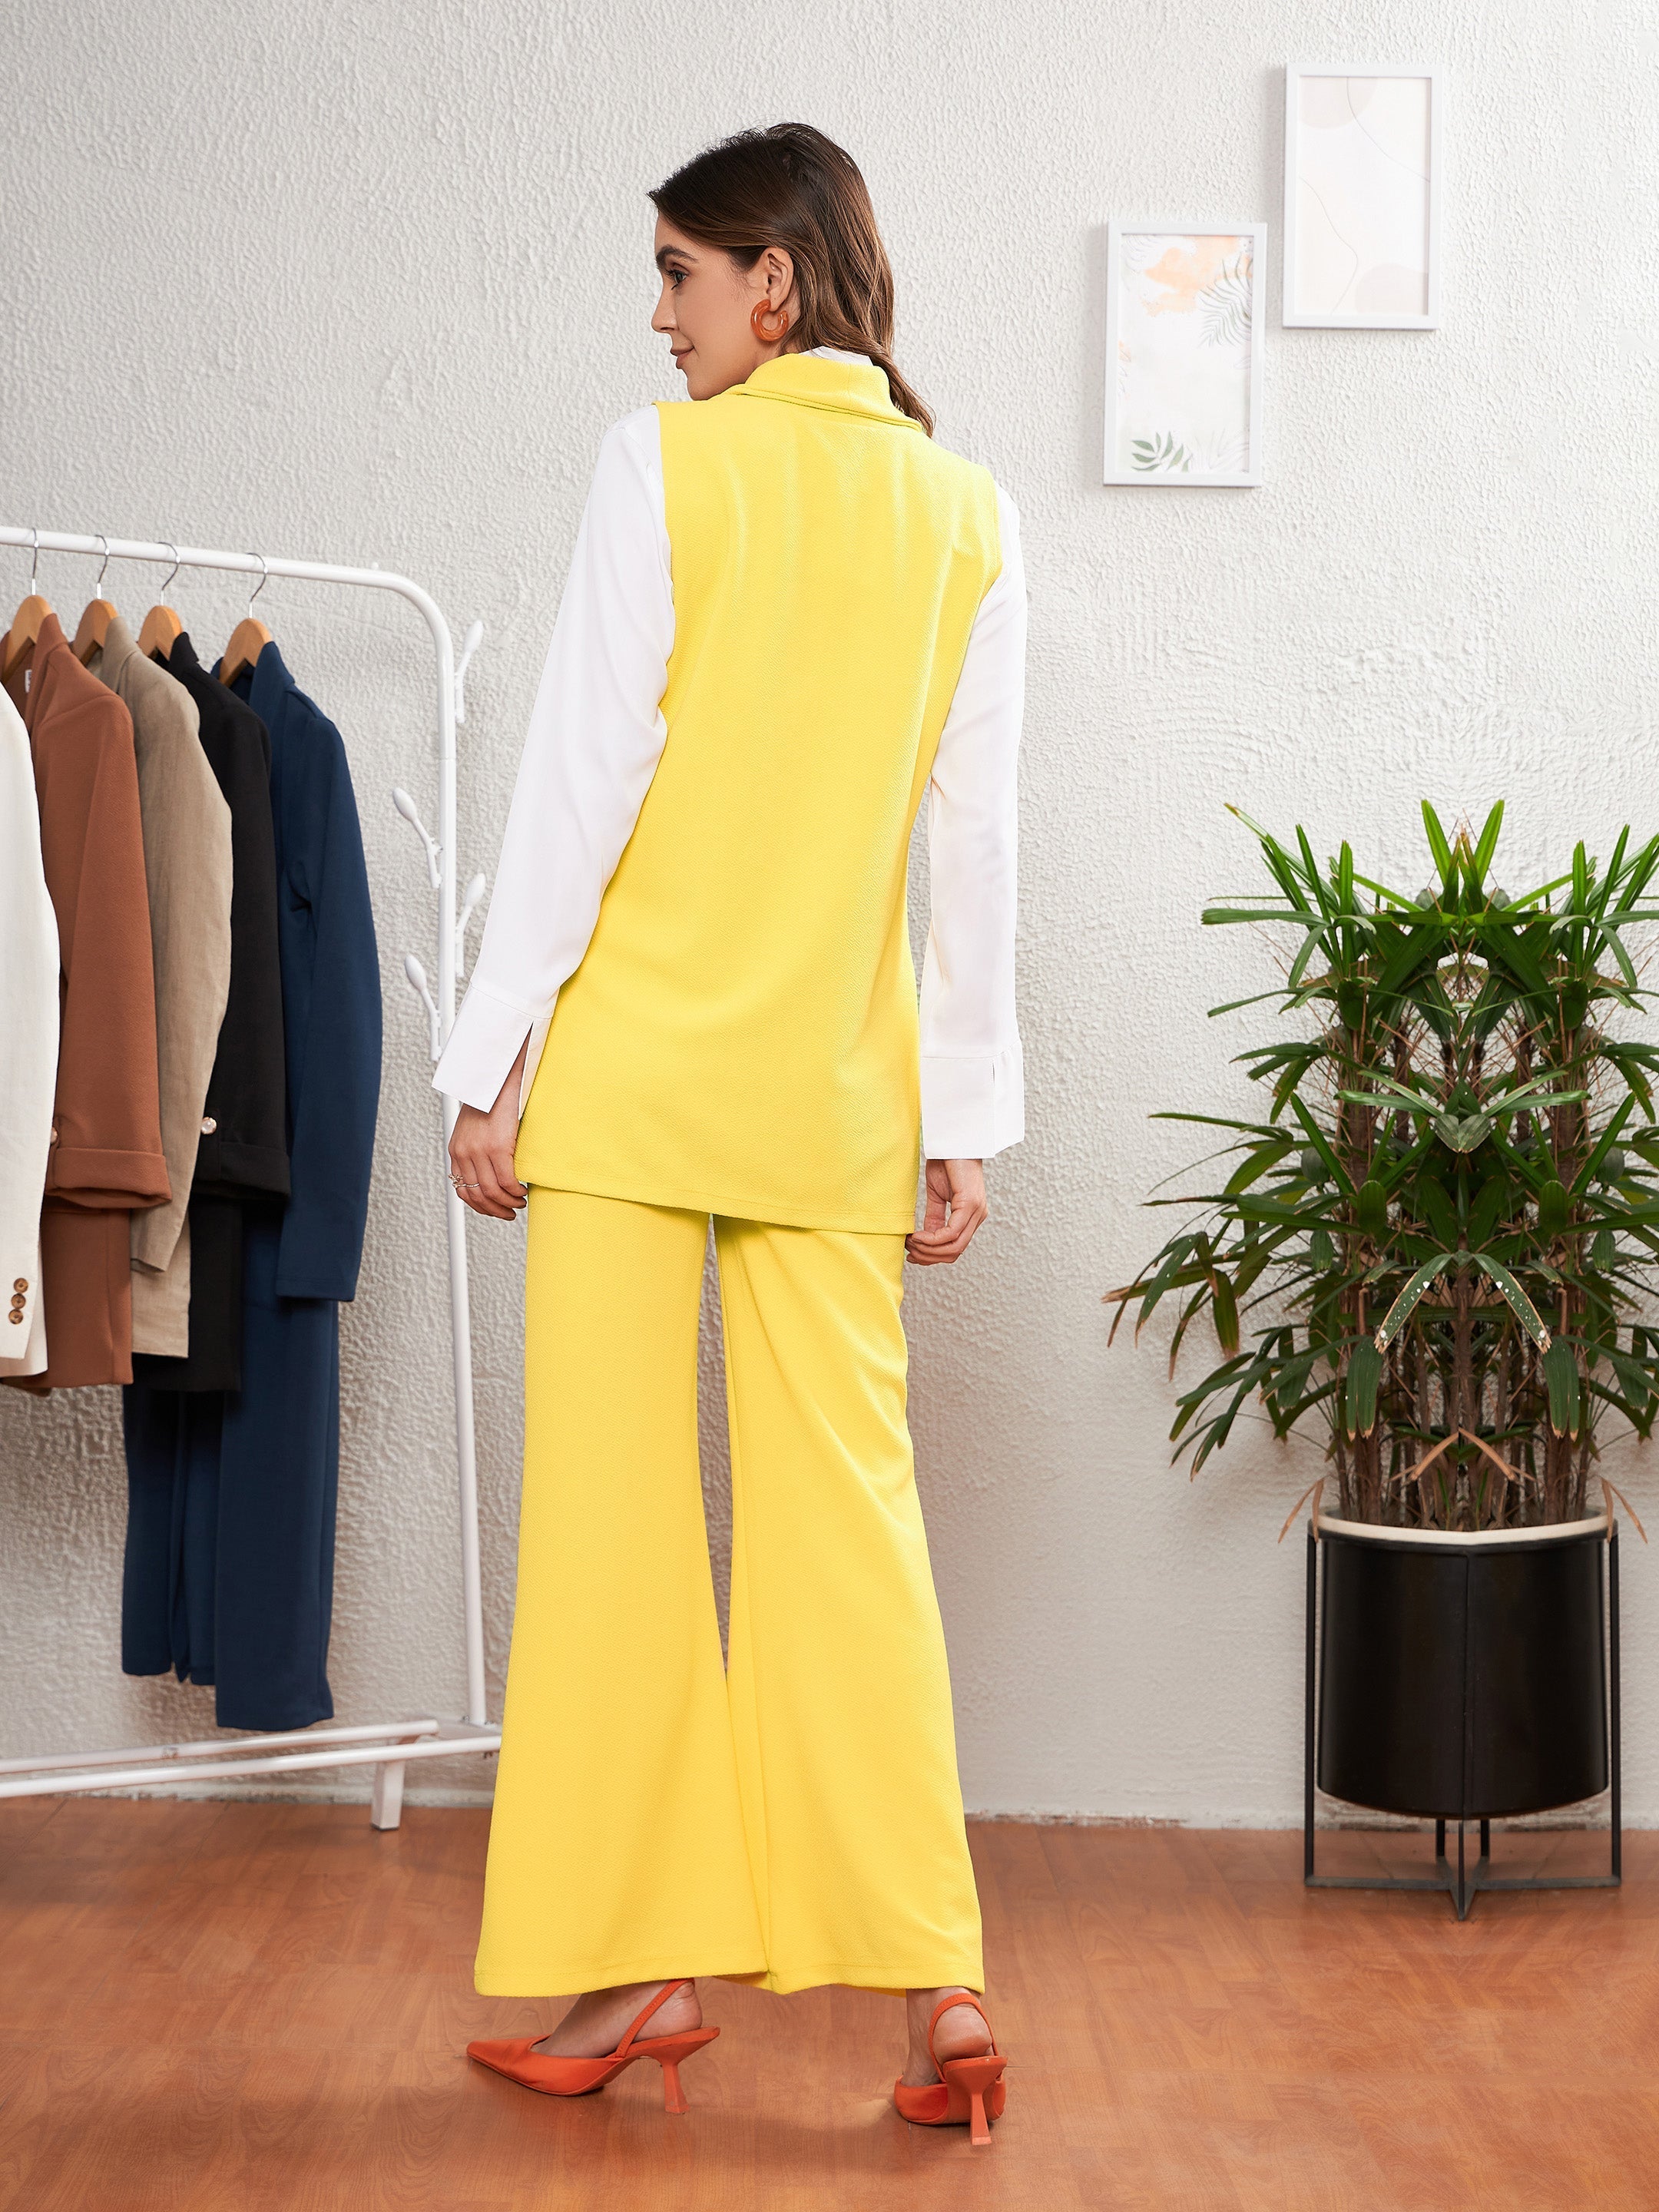 Women's Yellow Sleeveless Blazer With Bell Bottom Pants - SASSAFRAS